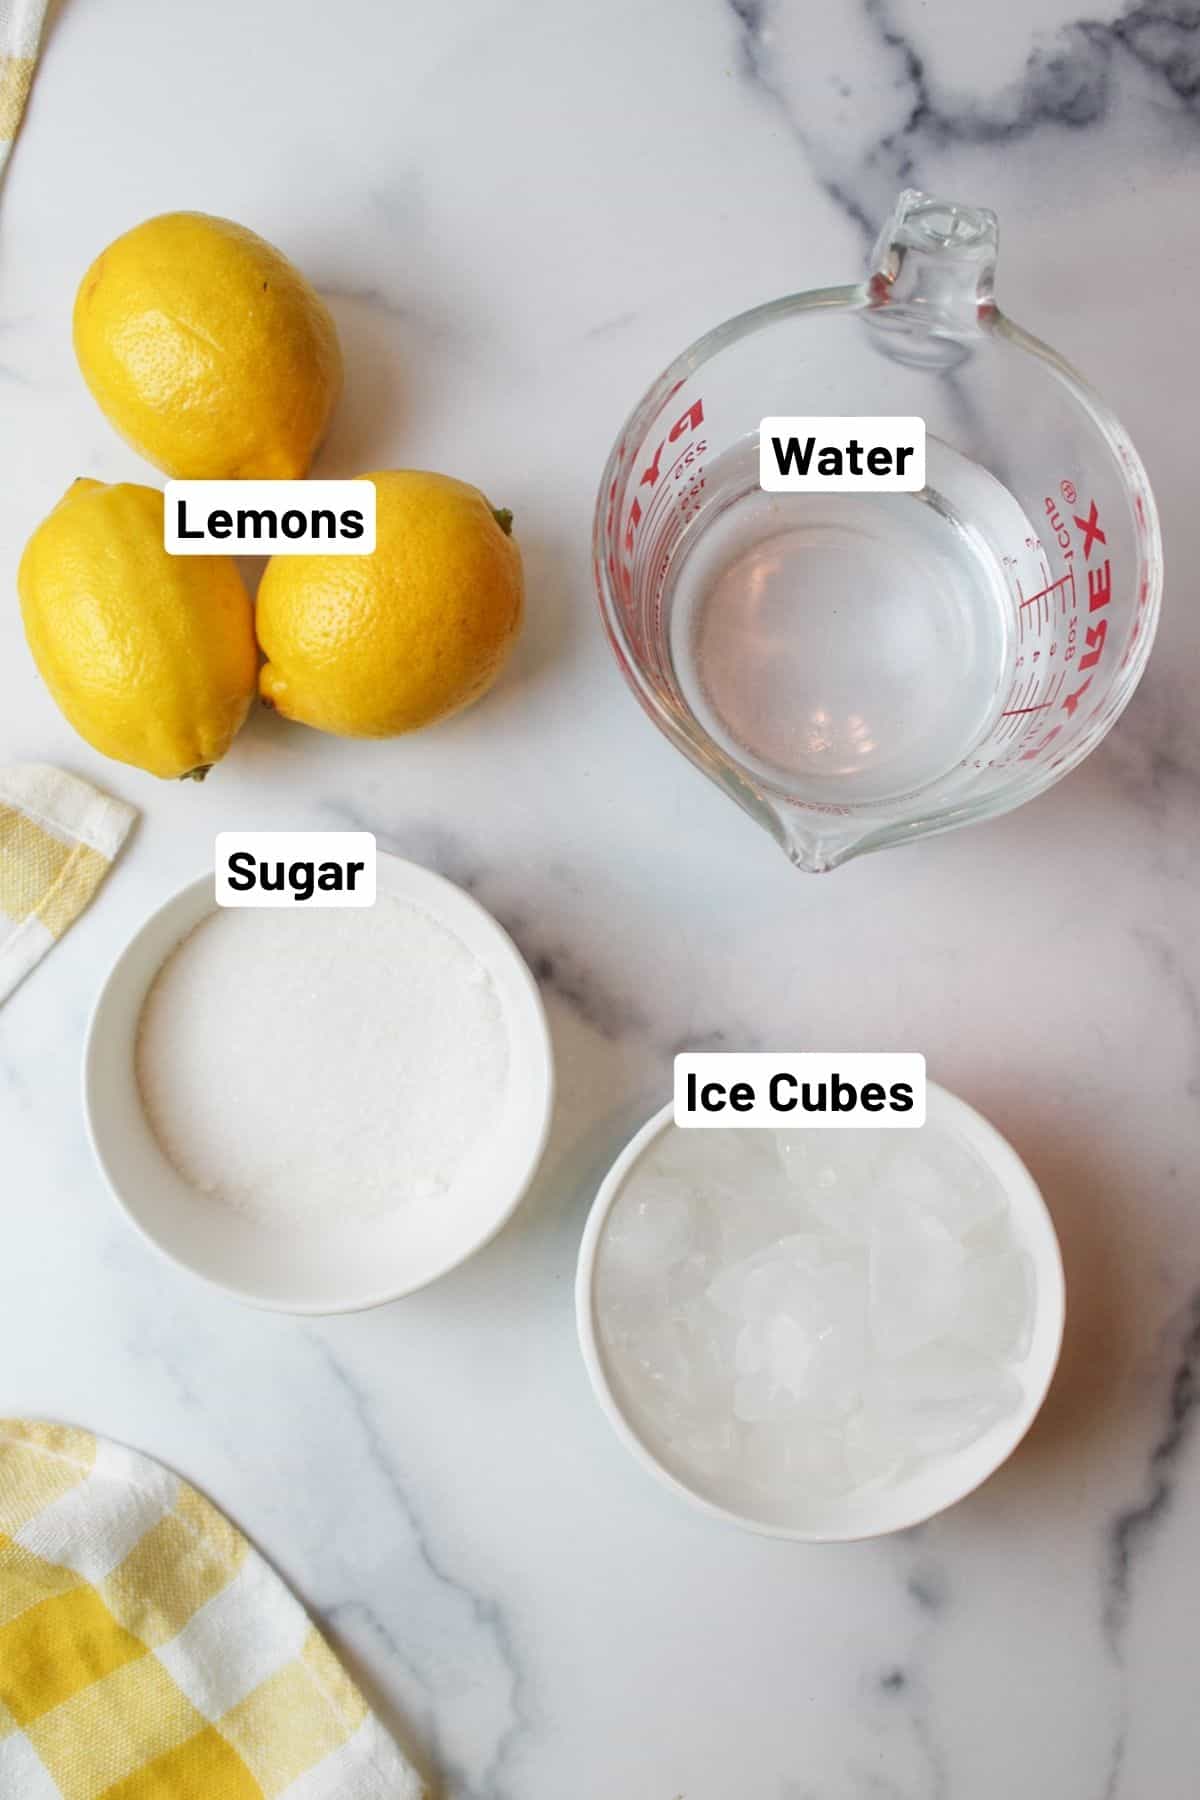 labeled ingredients needed to make single serving lemonade.